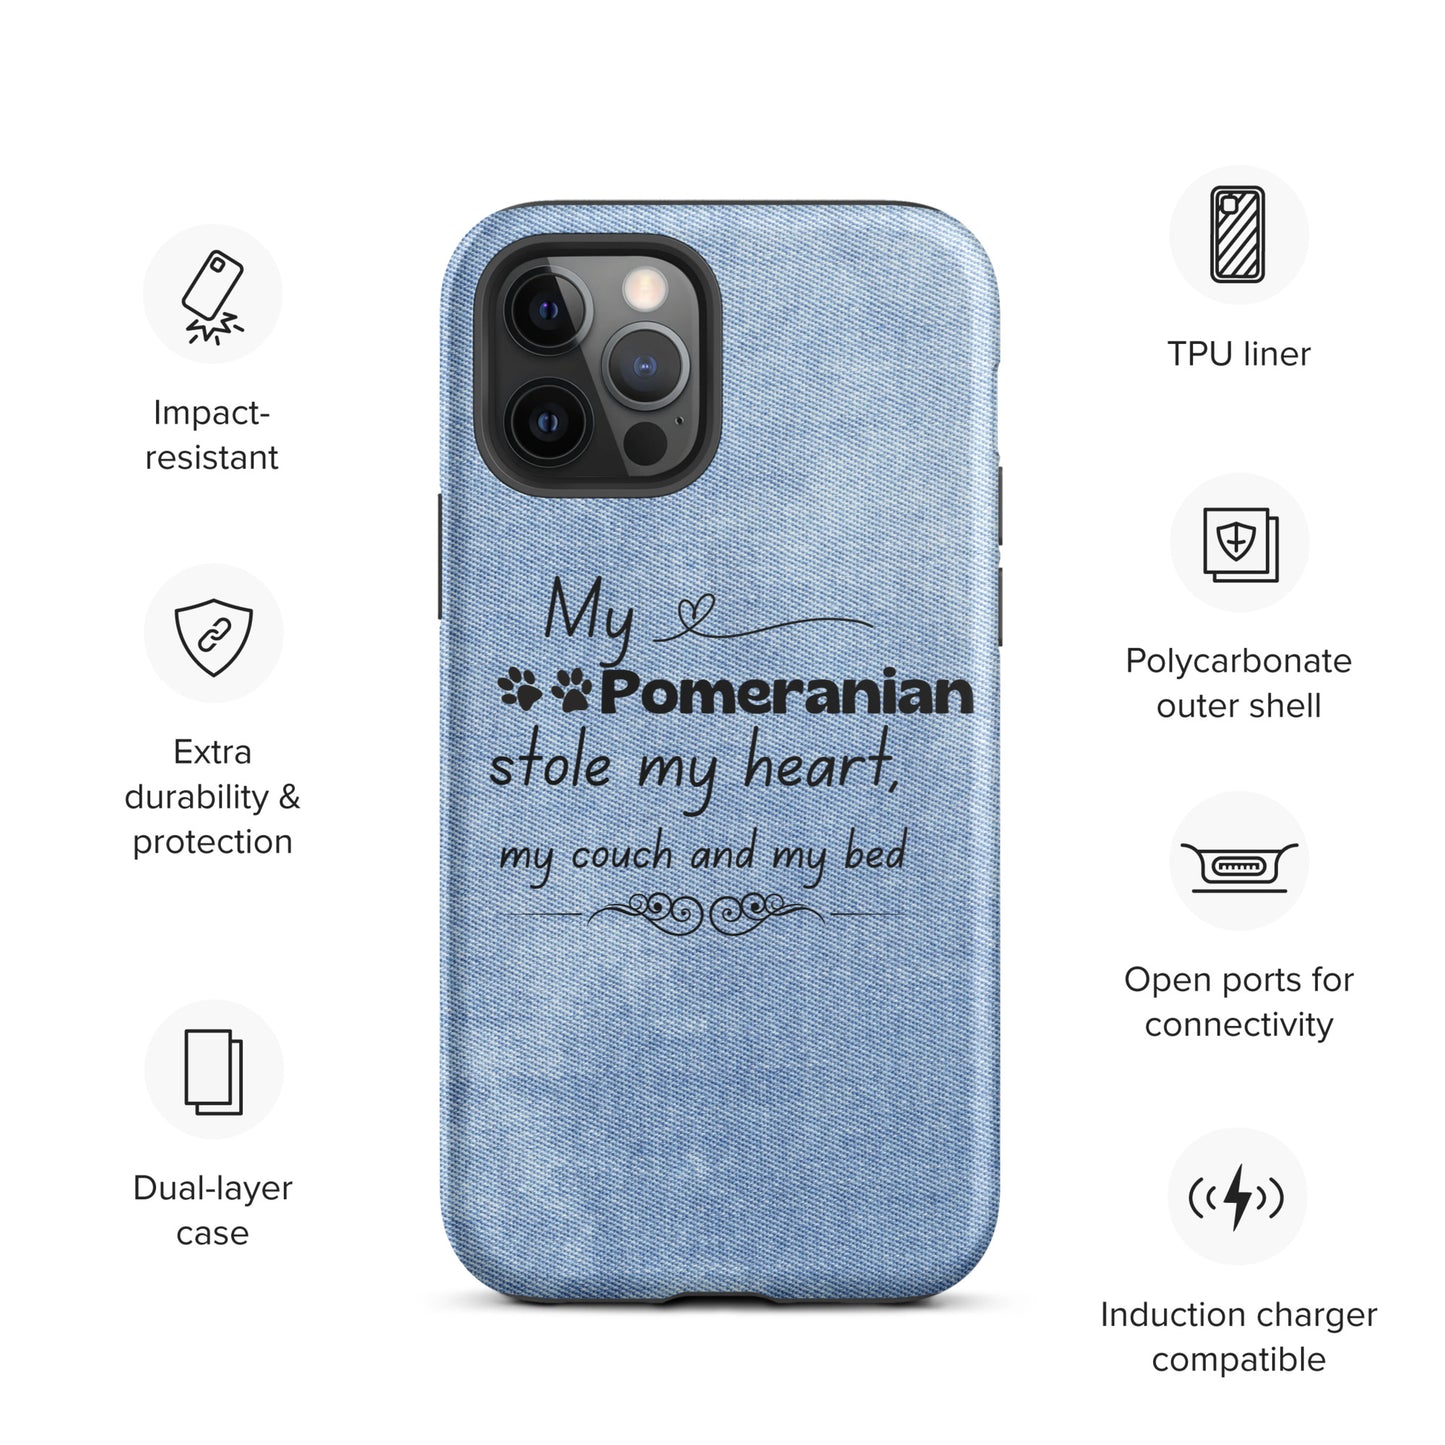 iPhone case 'My Pomeranian stole my heart..'